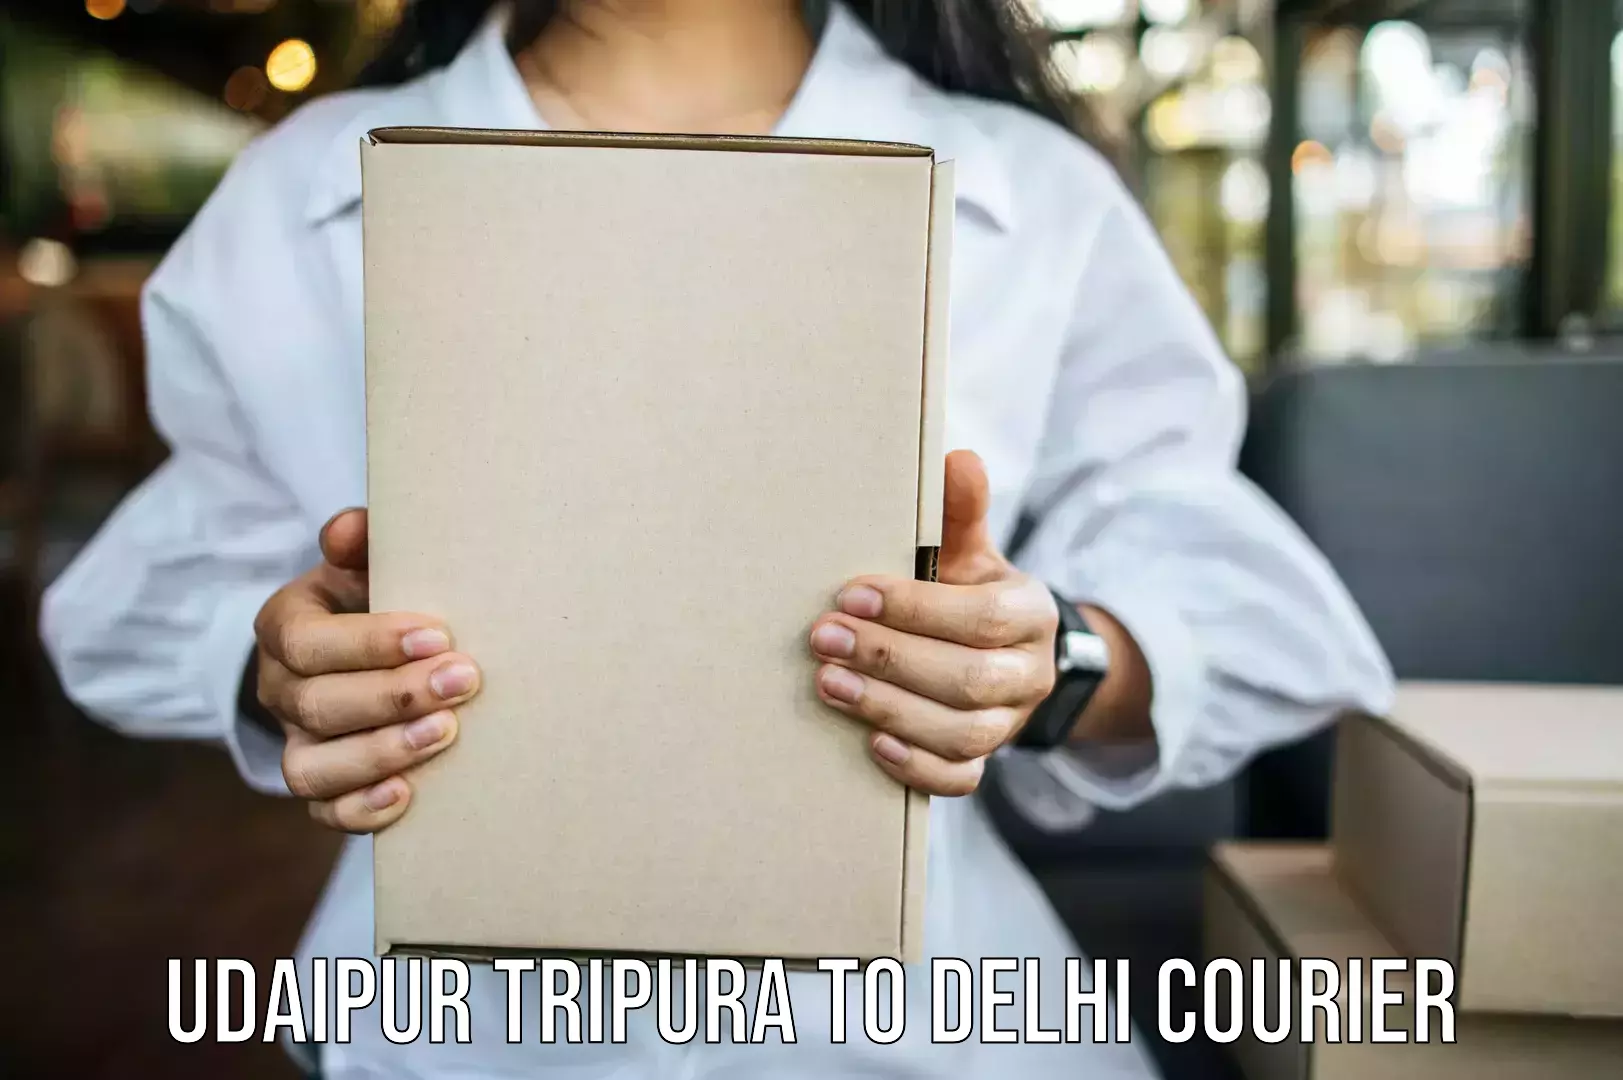 Furniture delivery service Udaipur Tripura to University of Delhi